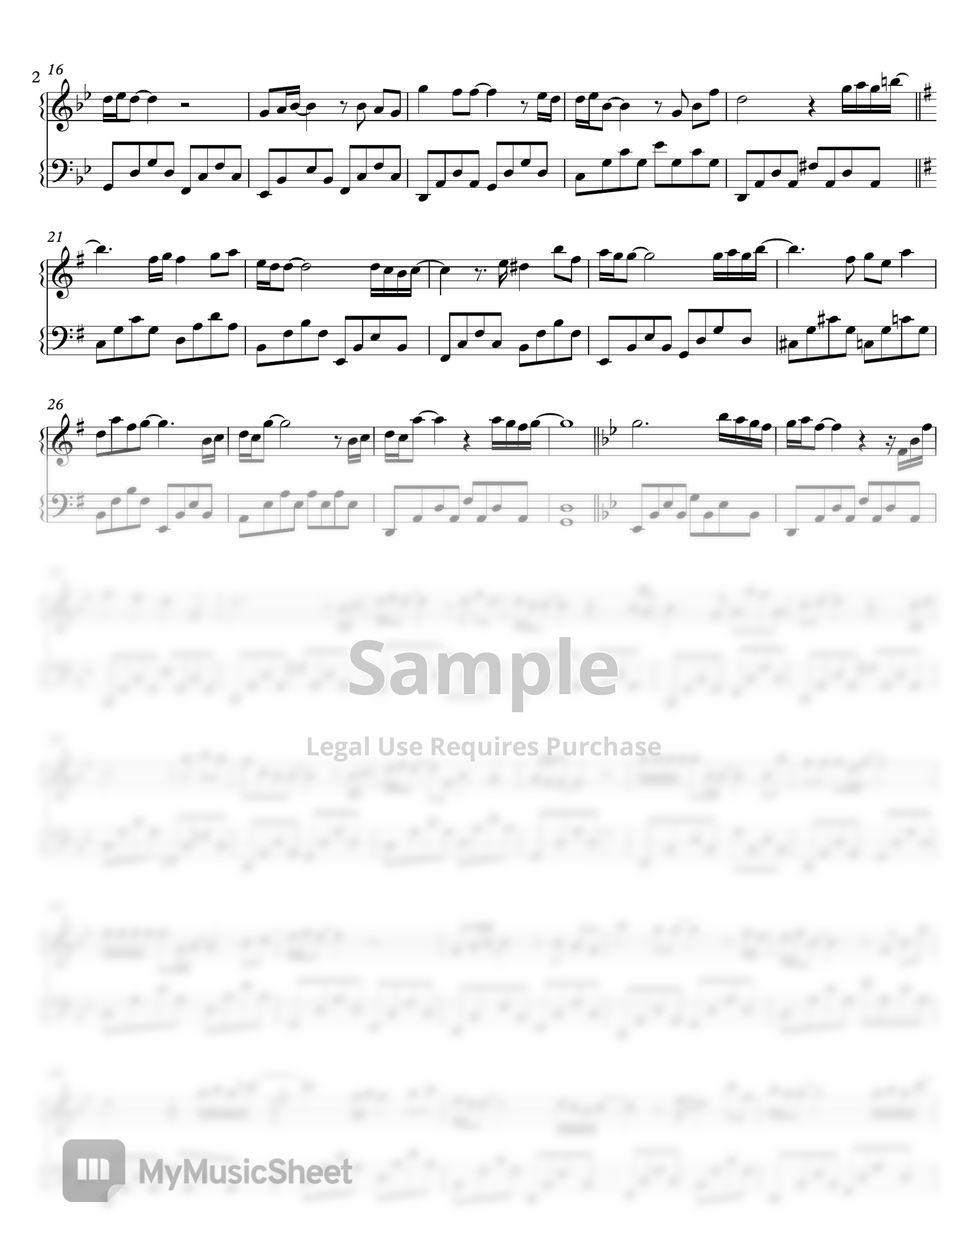 Baka Mitai Sheet Music - 5 Arrangements Available Instantly